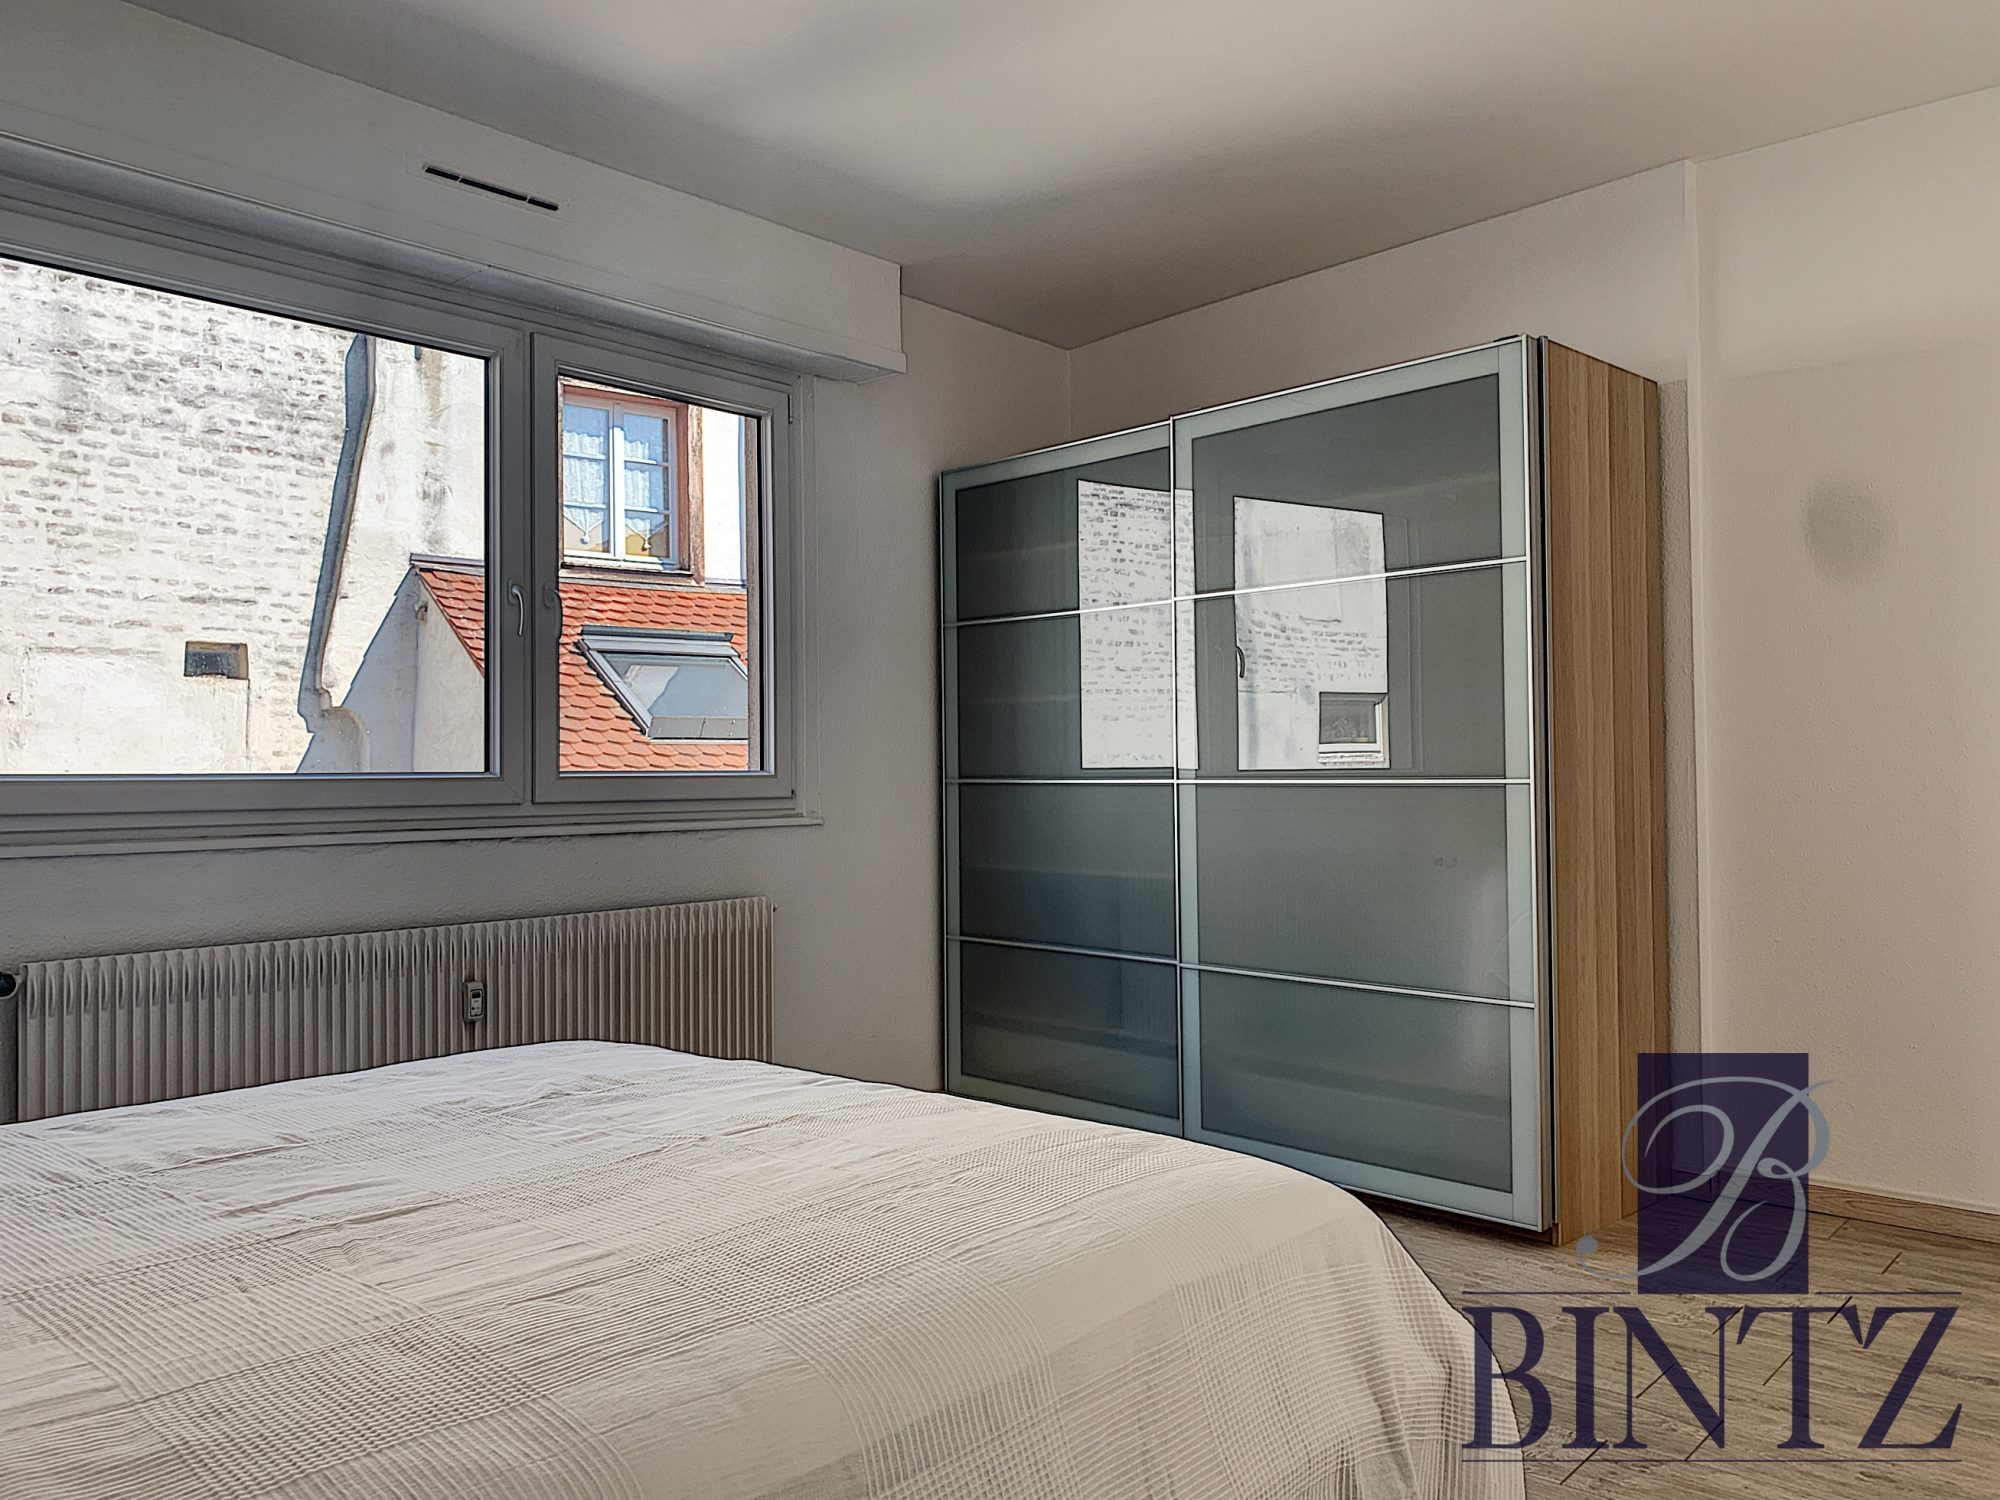 2 PIECES MEUBLE HYPER CENTRE - location appartement Strasbourg - Bintz Immobilier - 10